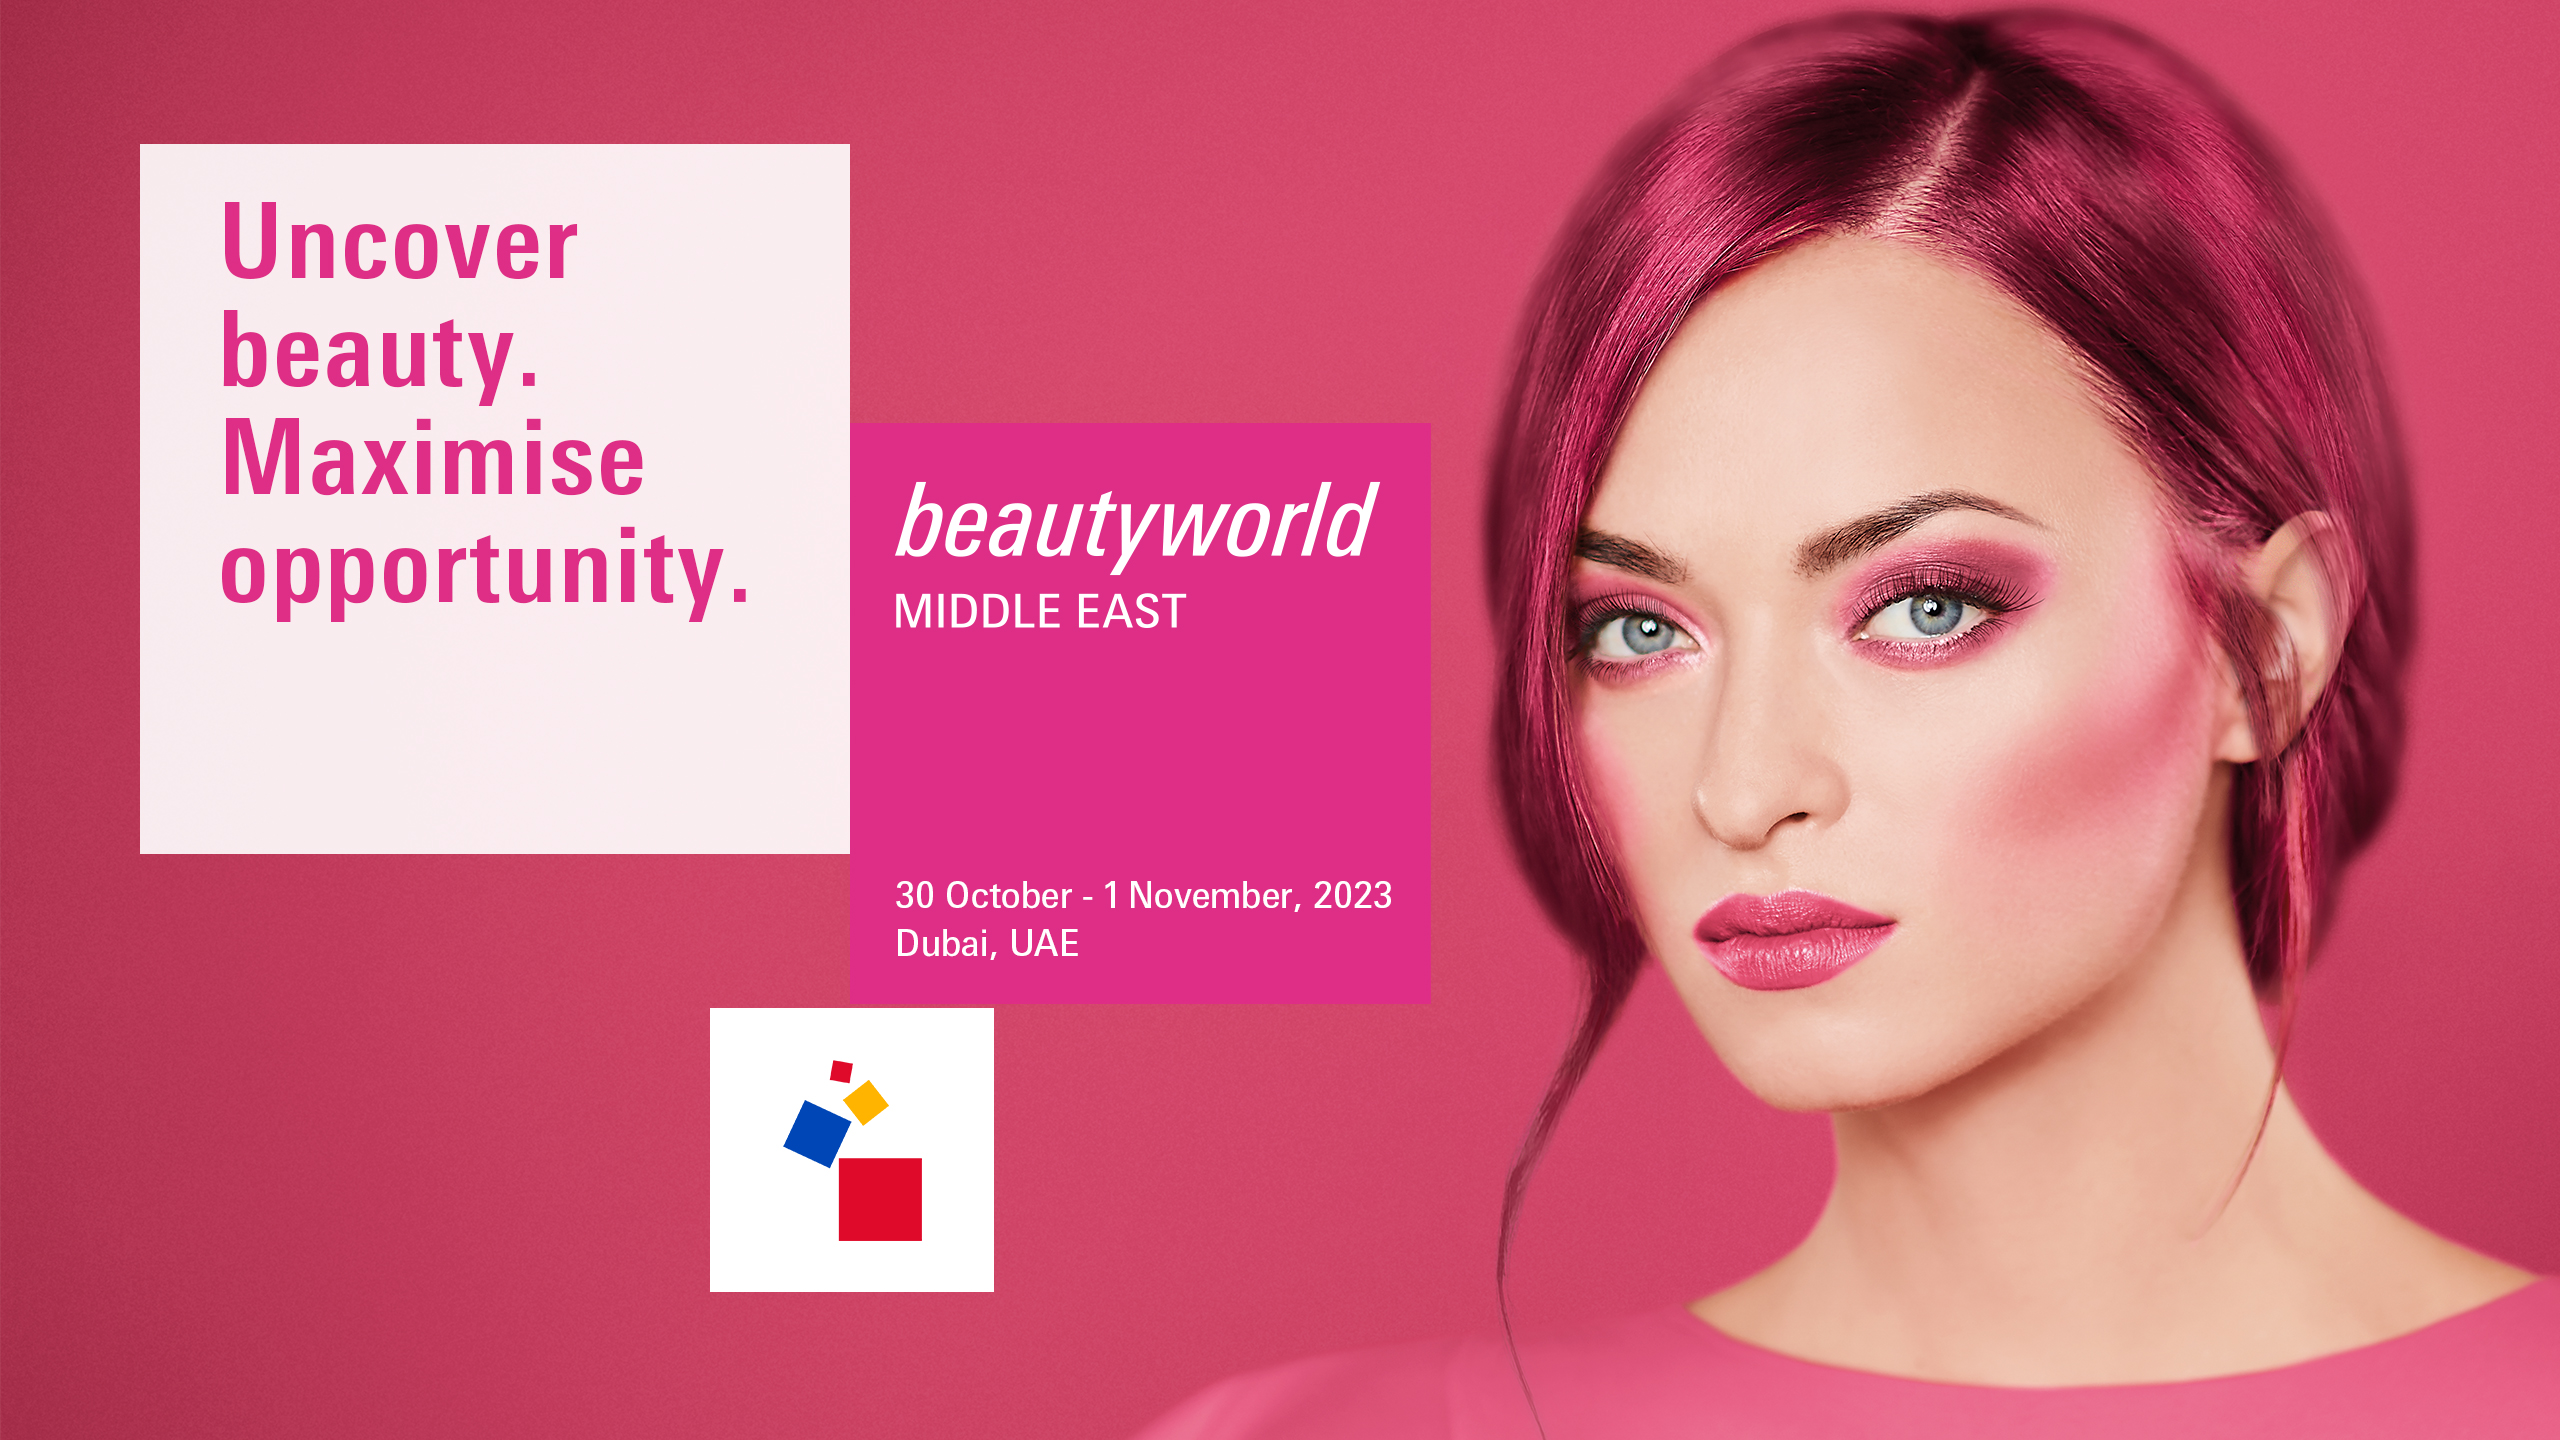 Beautyworld Middle East Keyvisual 2023